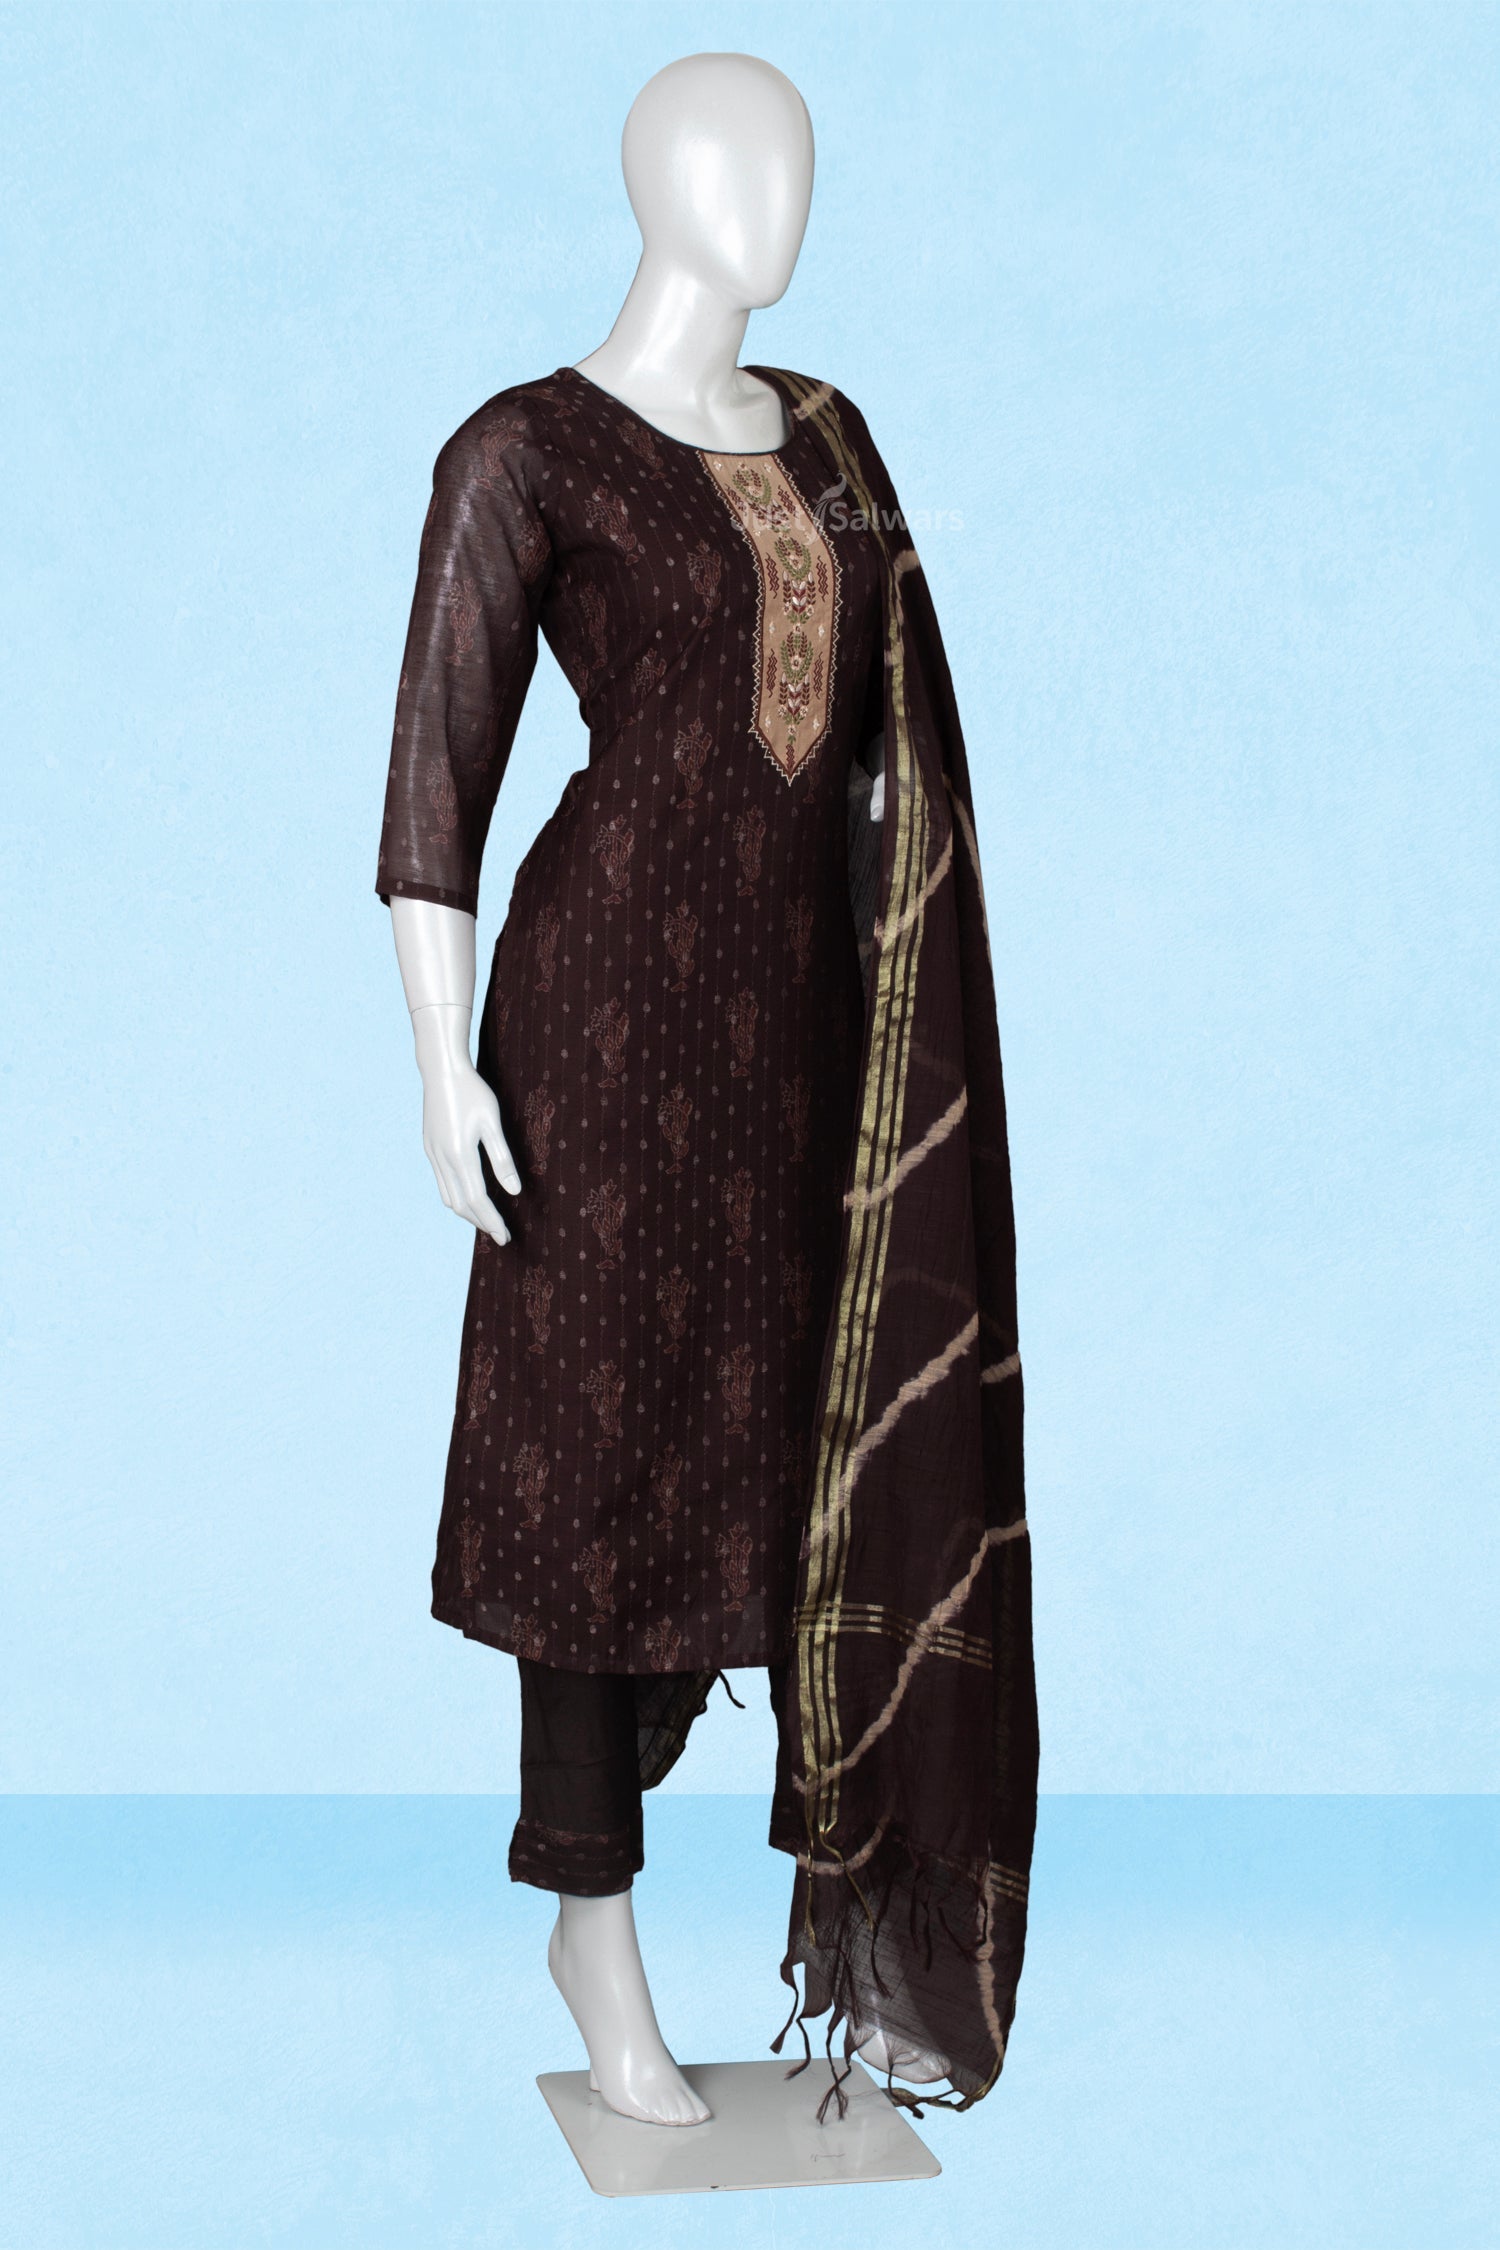 Brown Colour Straight Cut Salwar Suit -Salwar Suit- Just Salwars